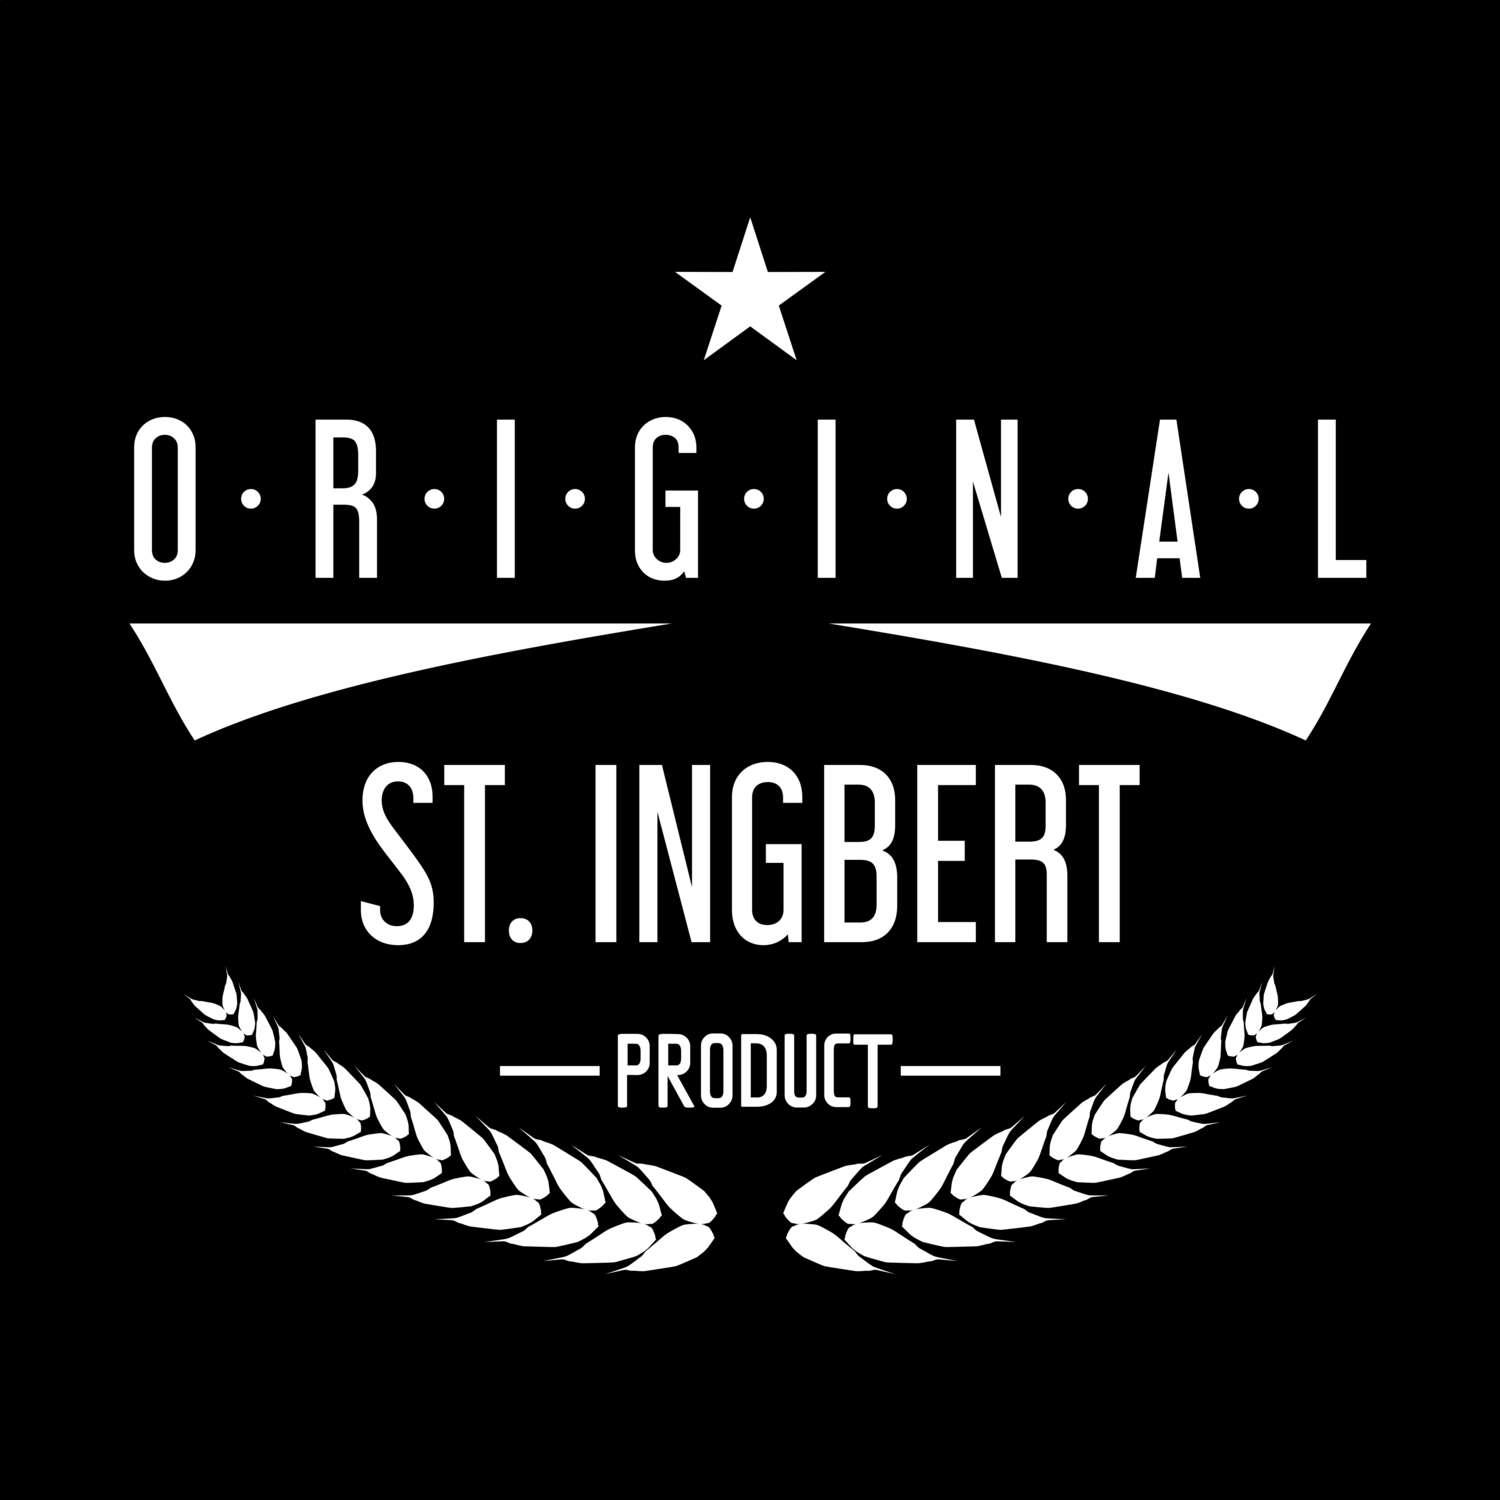 St. Ingbert T-Shirt »Original Product«